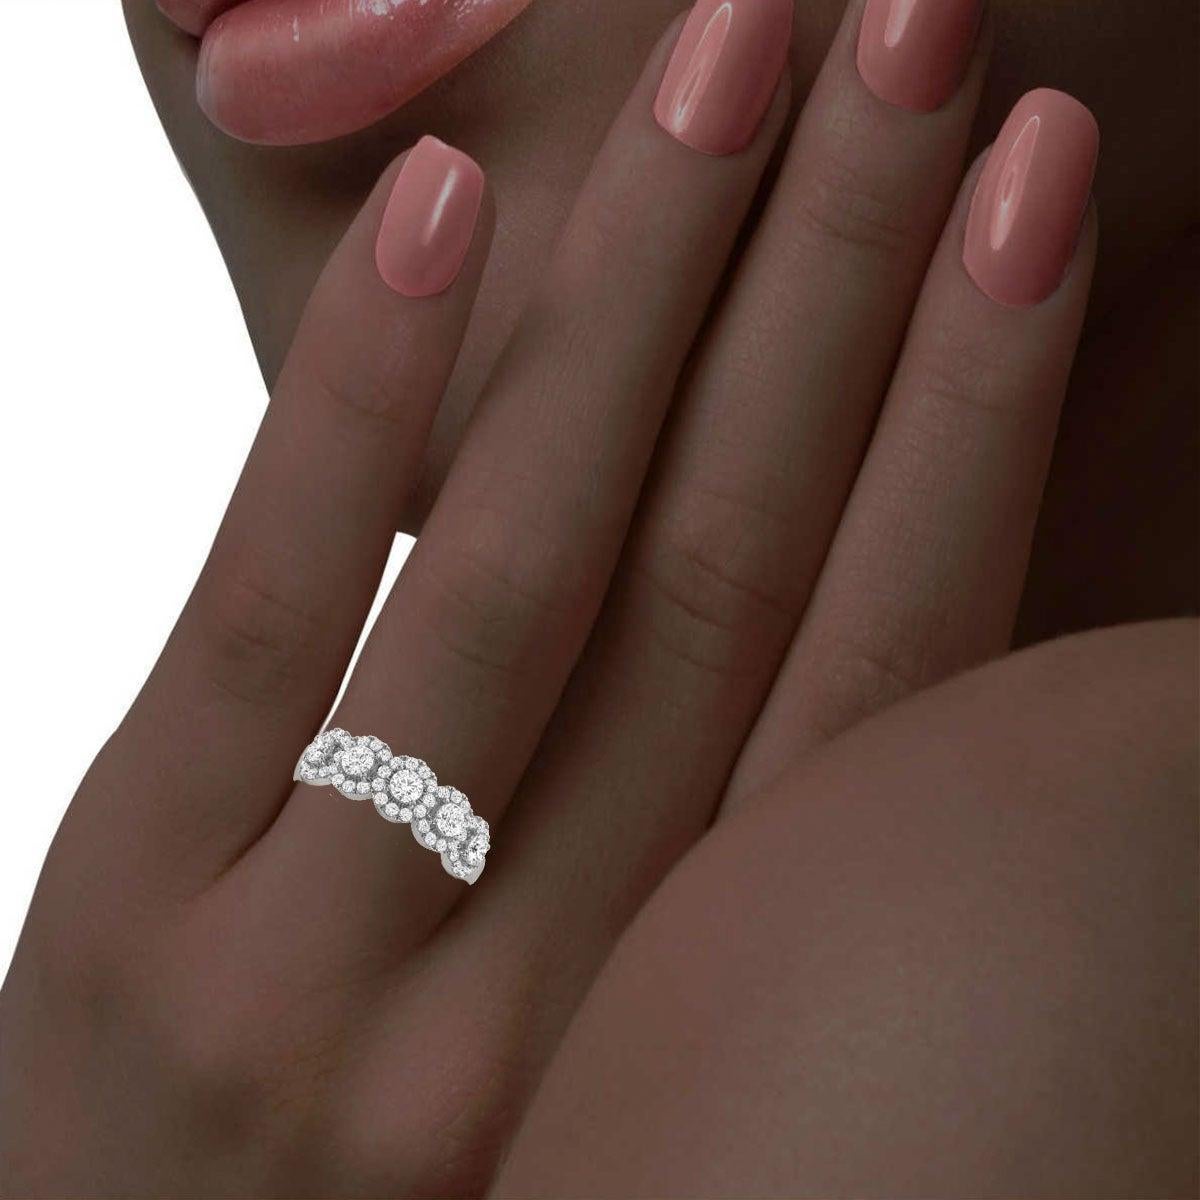 For Sale:  18k White Gold Petite Jenna Halo Diamond Ring '1/2 Ct. Tw' 4